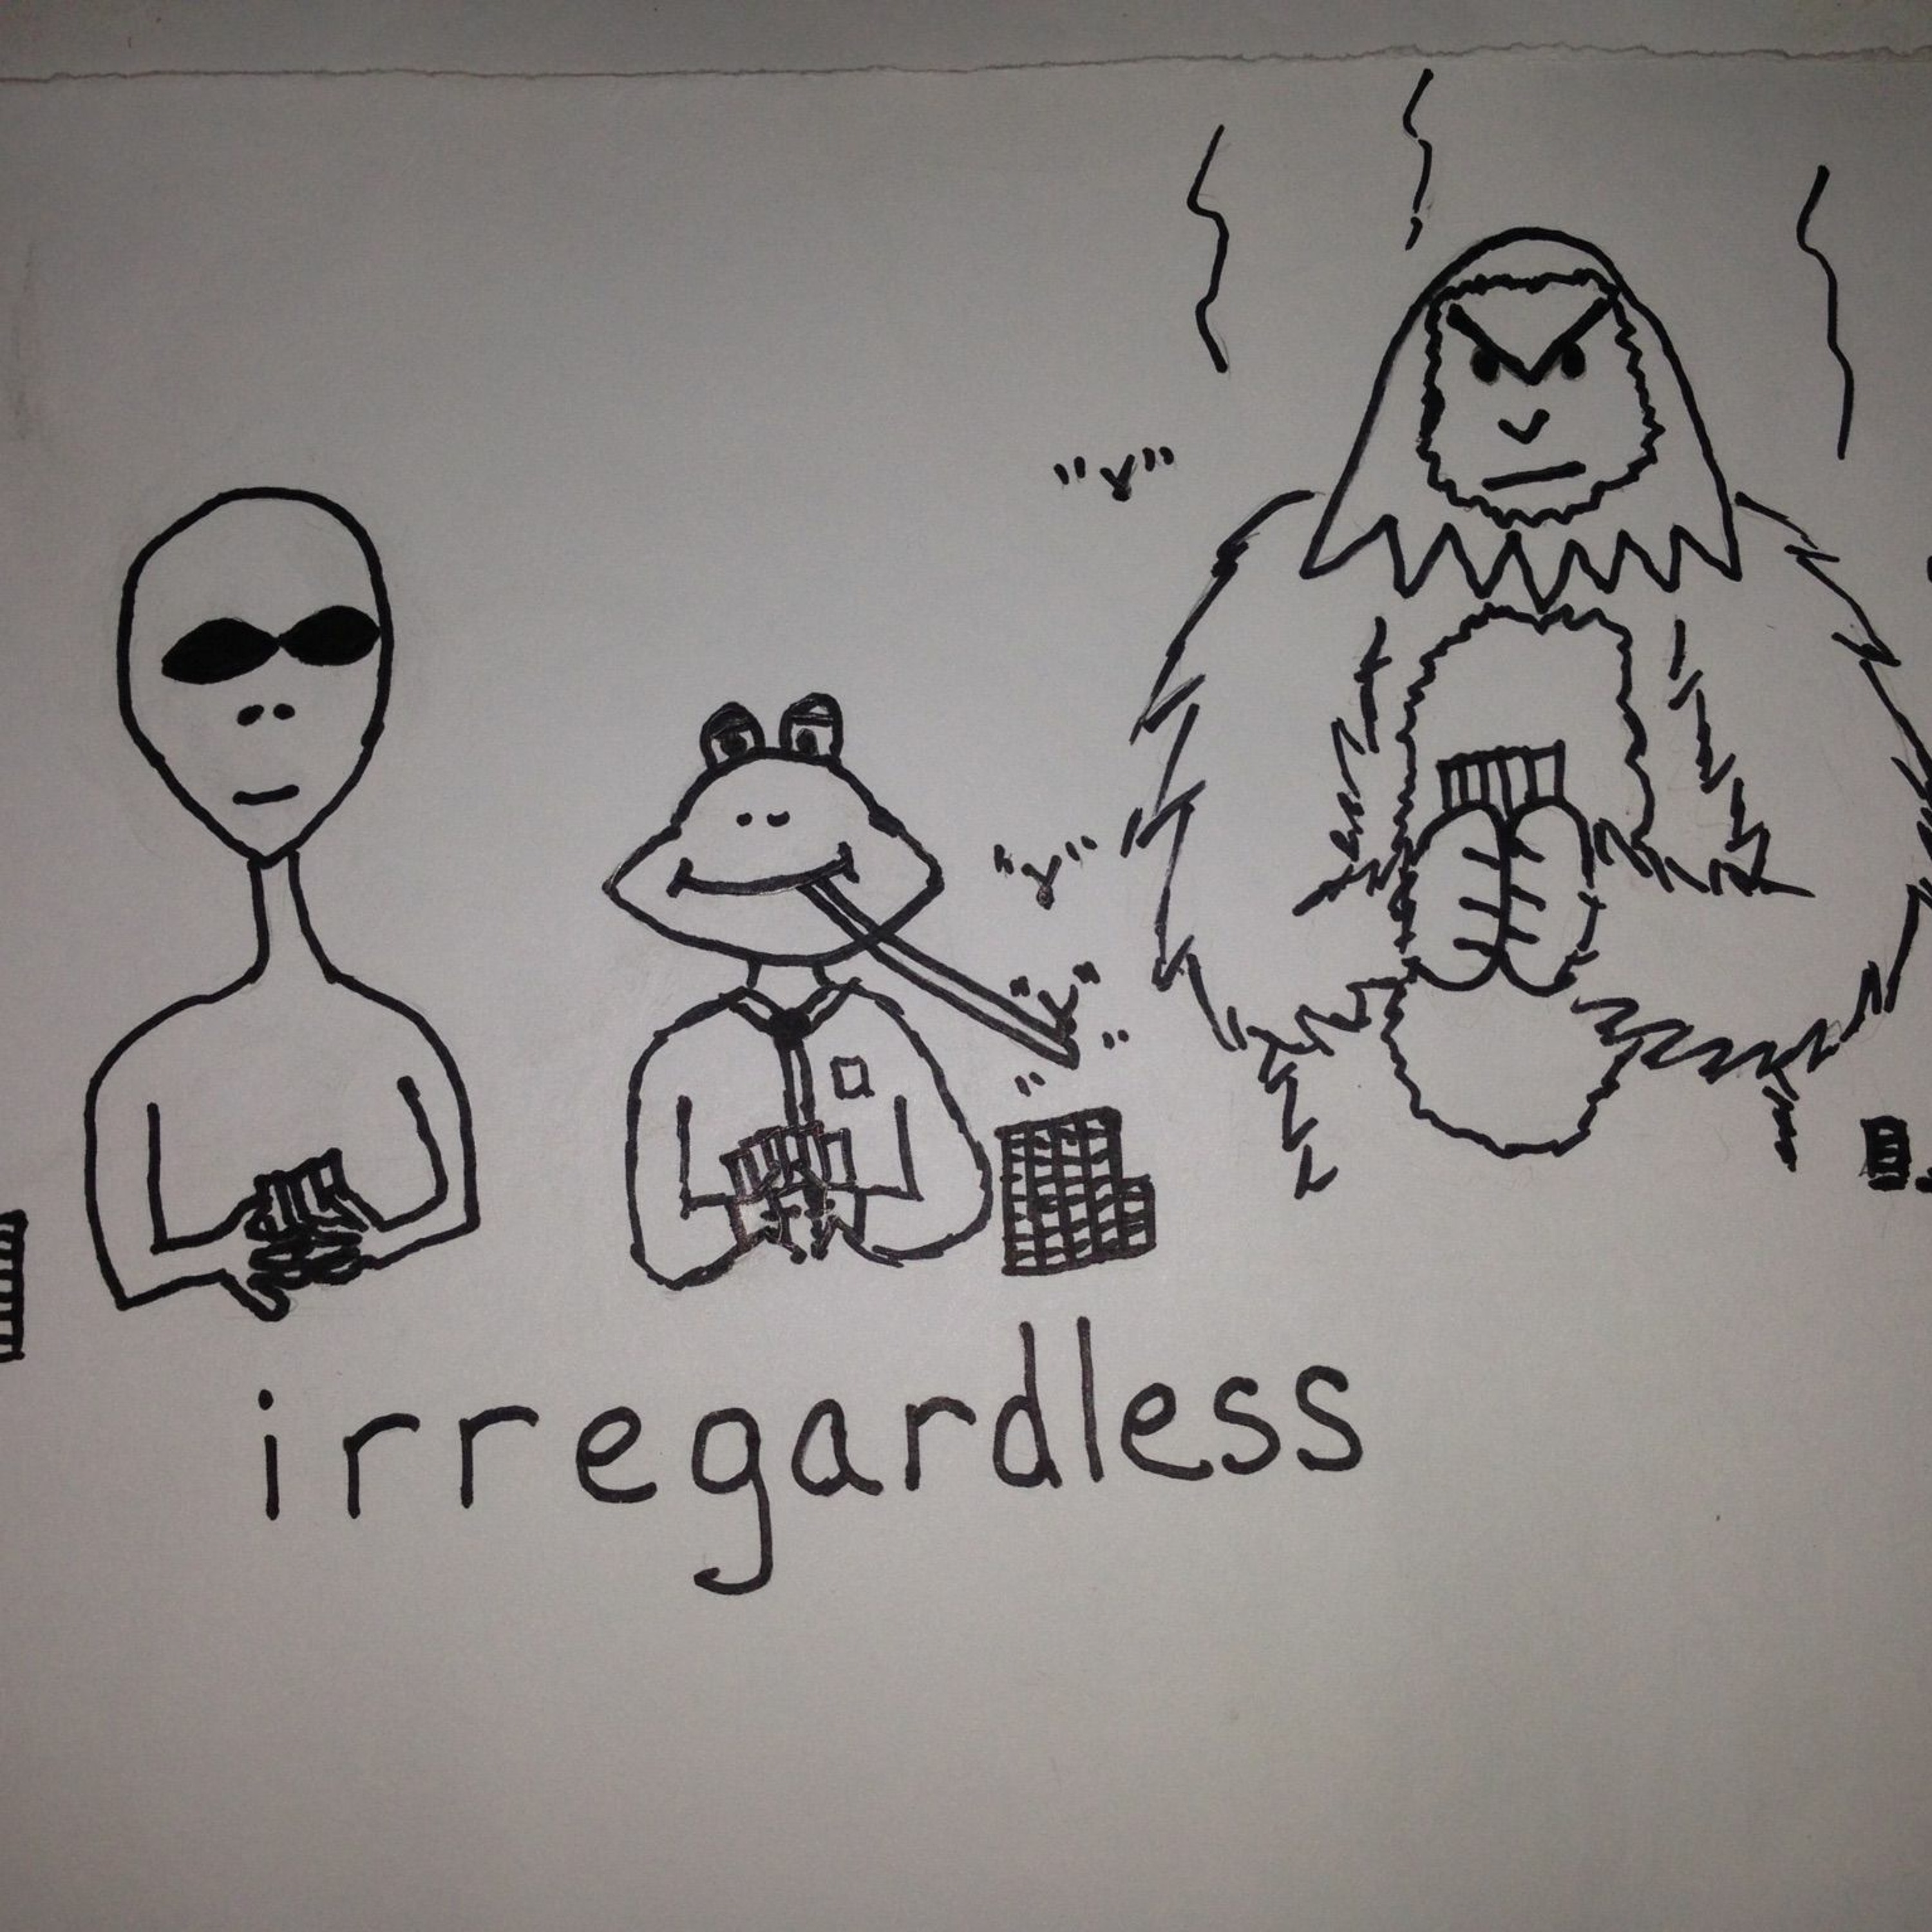 Irregardless Episode 108 - Artie Lange (Heaven’s Gate)